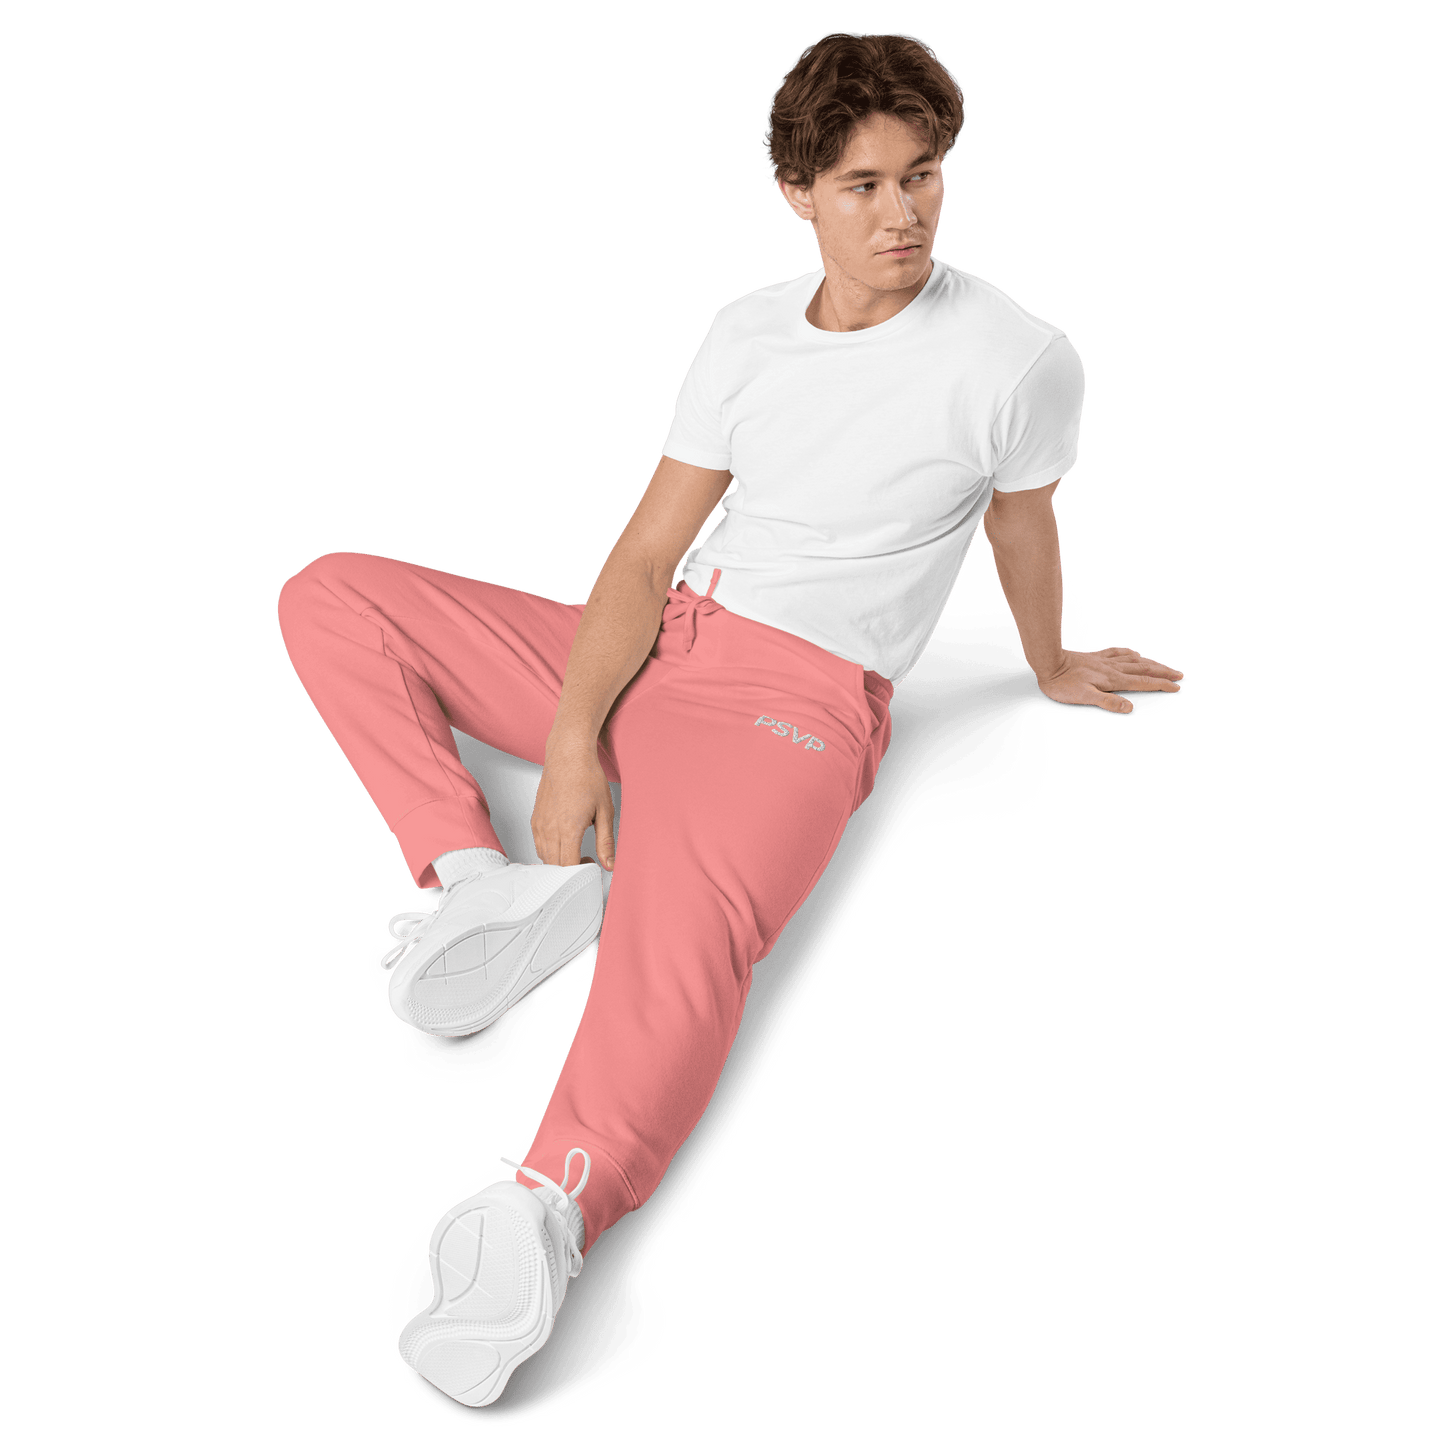 PSVP Pigment-Dyed Dusty Pink Sweatpants - Embroidery | Sweatpants | PARADIS SVP